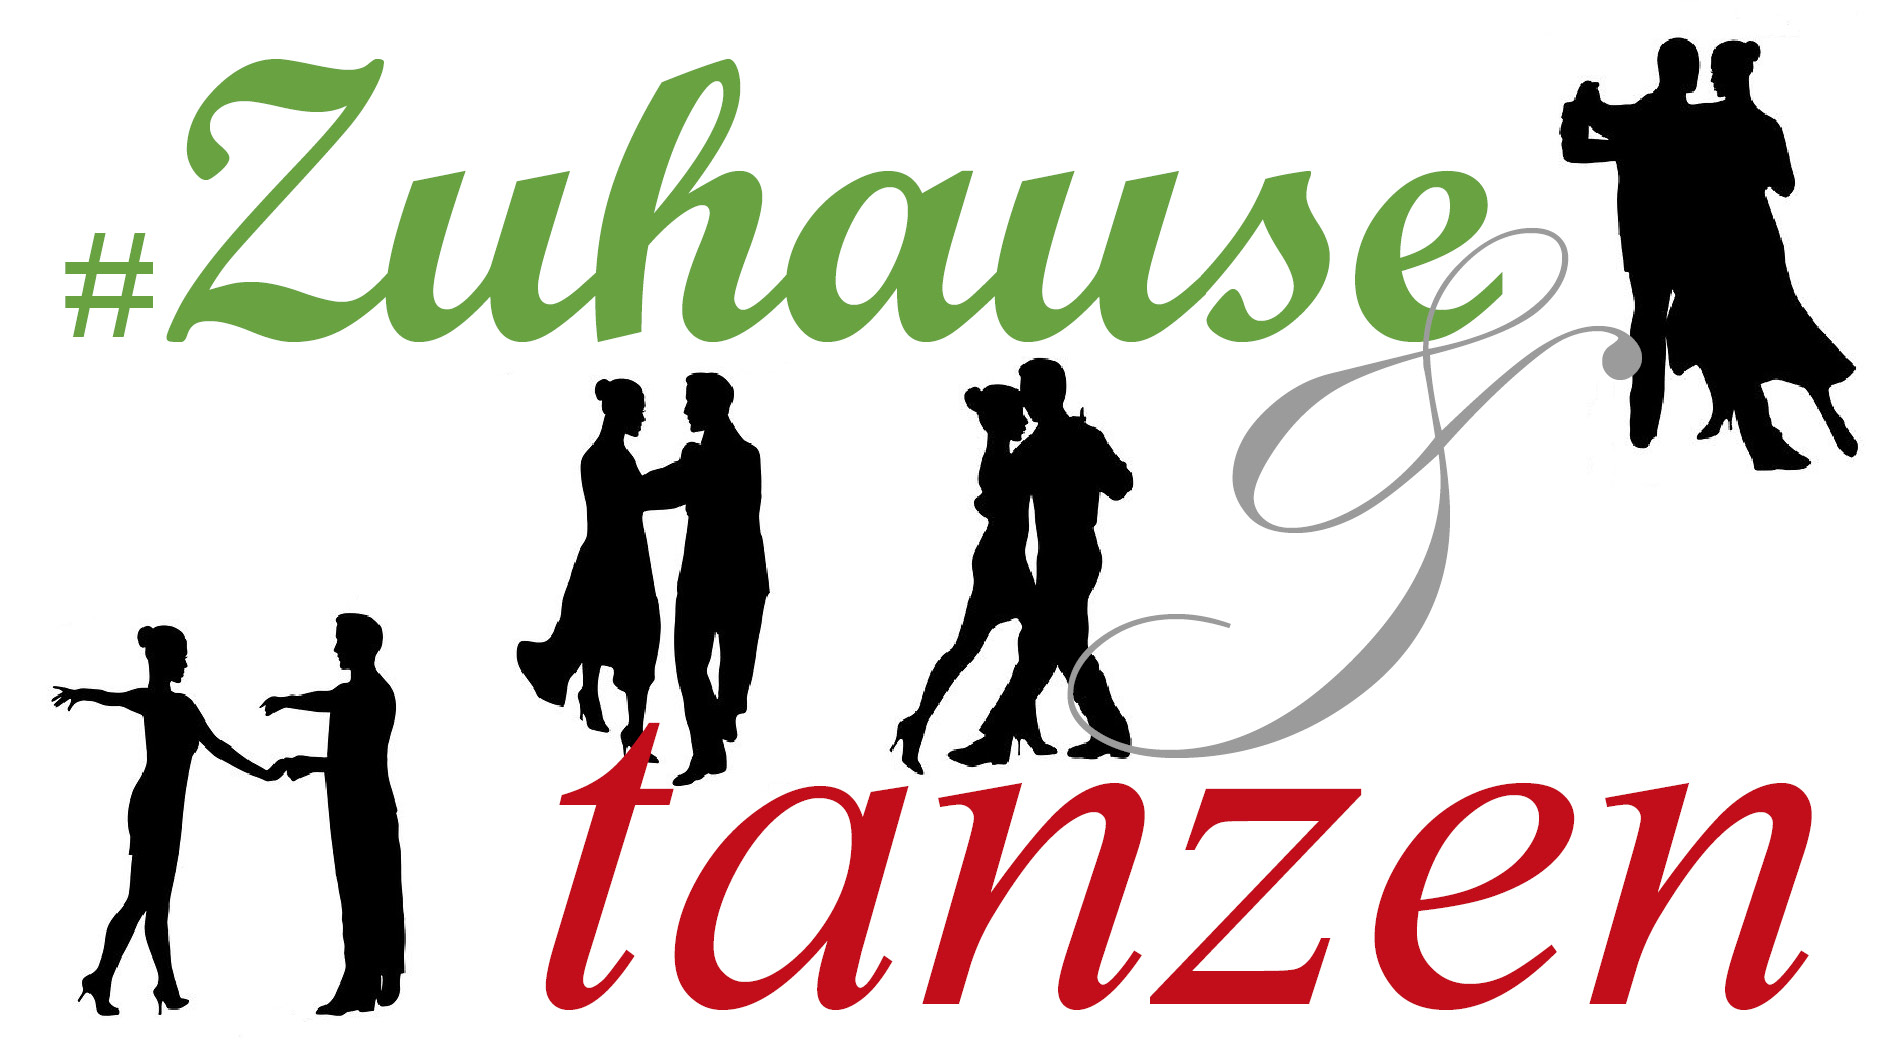 #Zuhause & tanzen